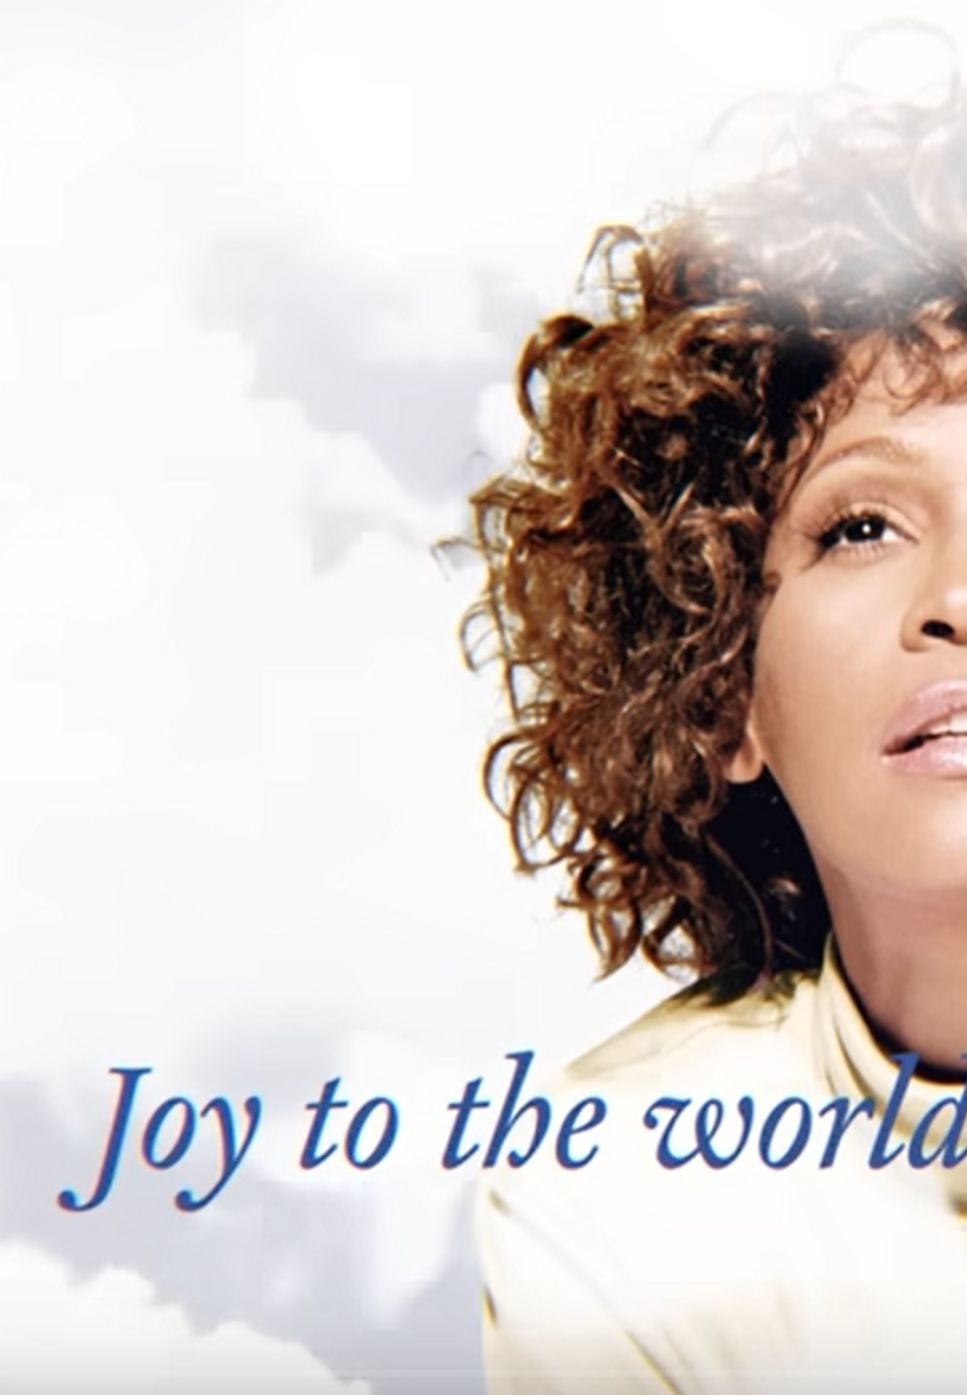 Whitney Houston - Joy to the world (Piano accompaniment) by Harmony Nudist